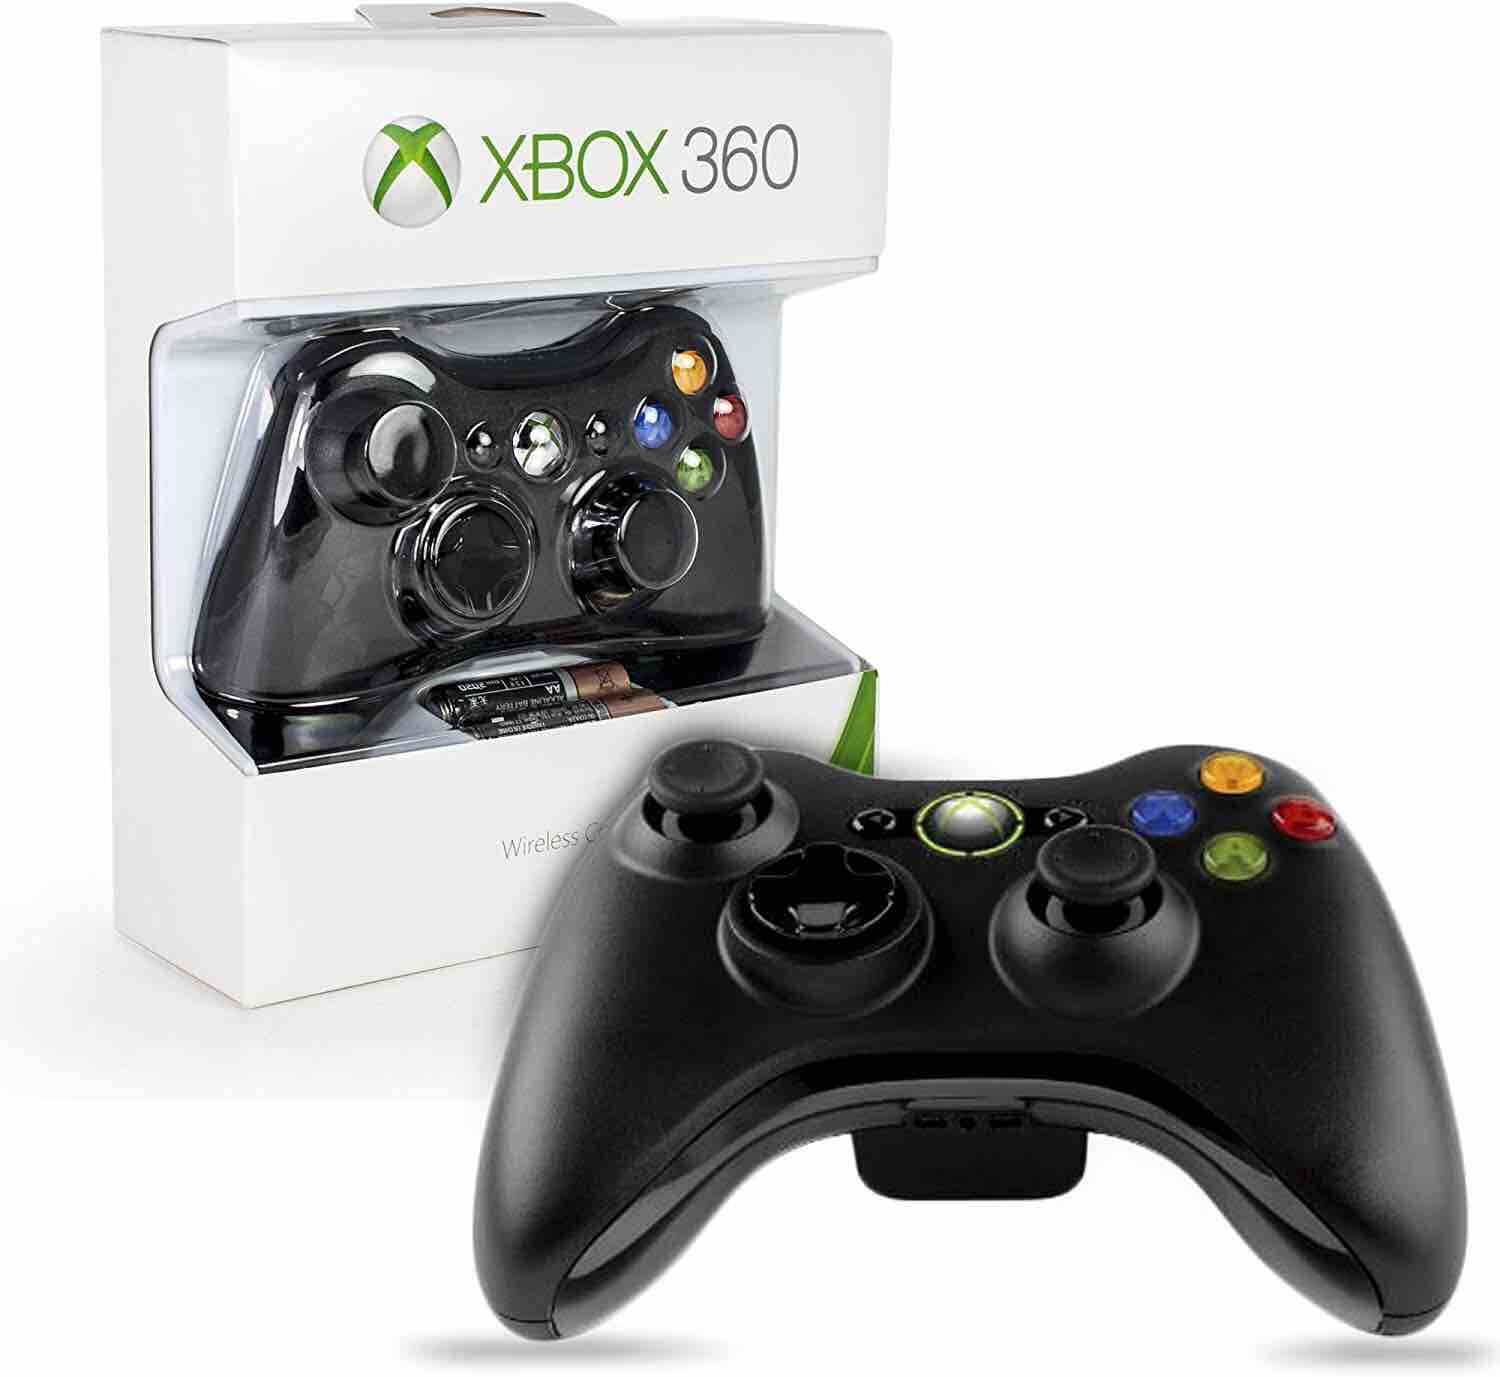 Хбох пк. Геймпад Xbox 360 беспроводной. Джойстик Xbox 360 беспроводной оригинал. Геймпад Microsoft Xbox 360 Wireless Controller. Беспроводной джойстик Xbox 360 черный.